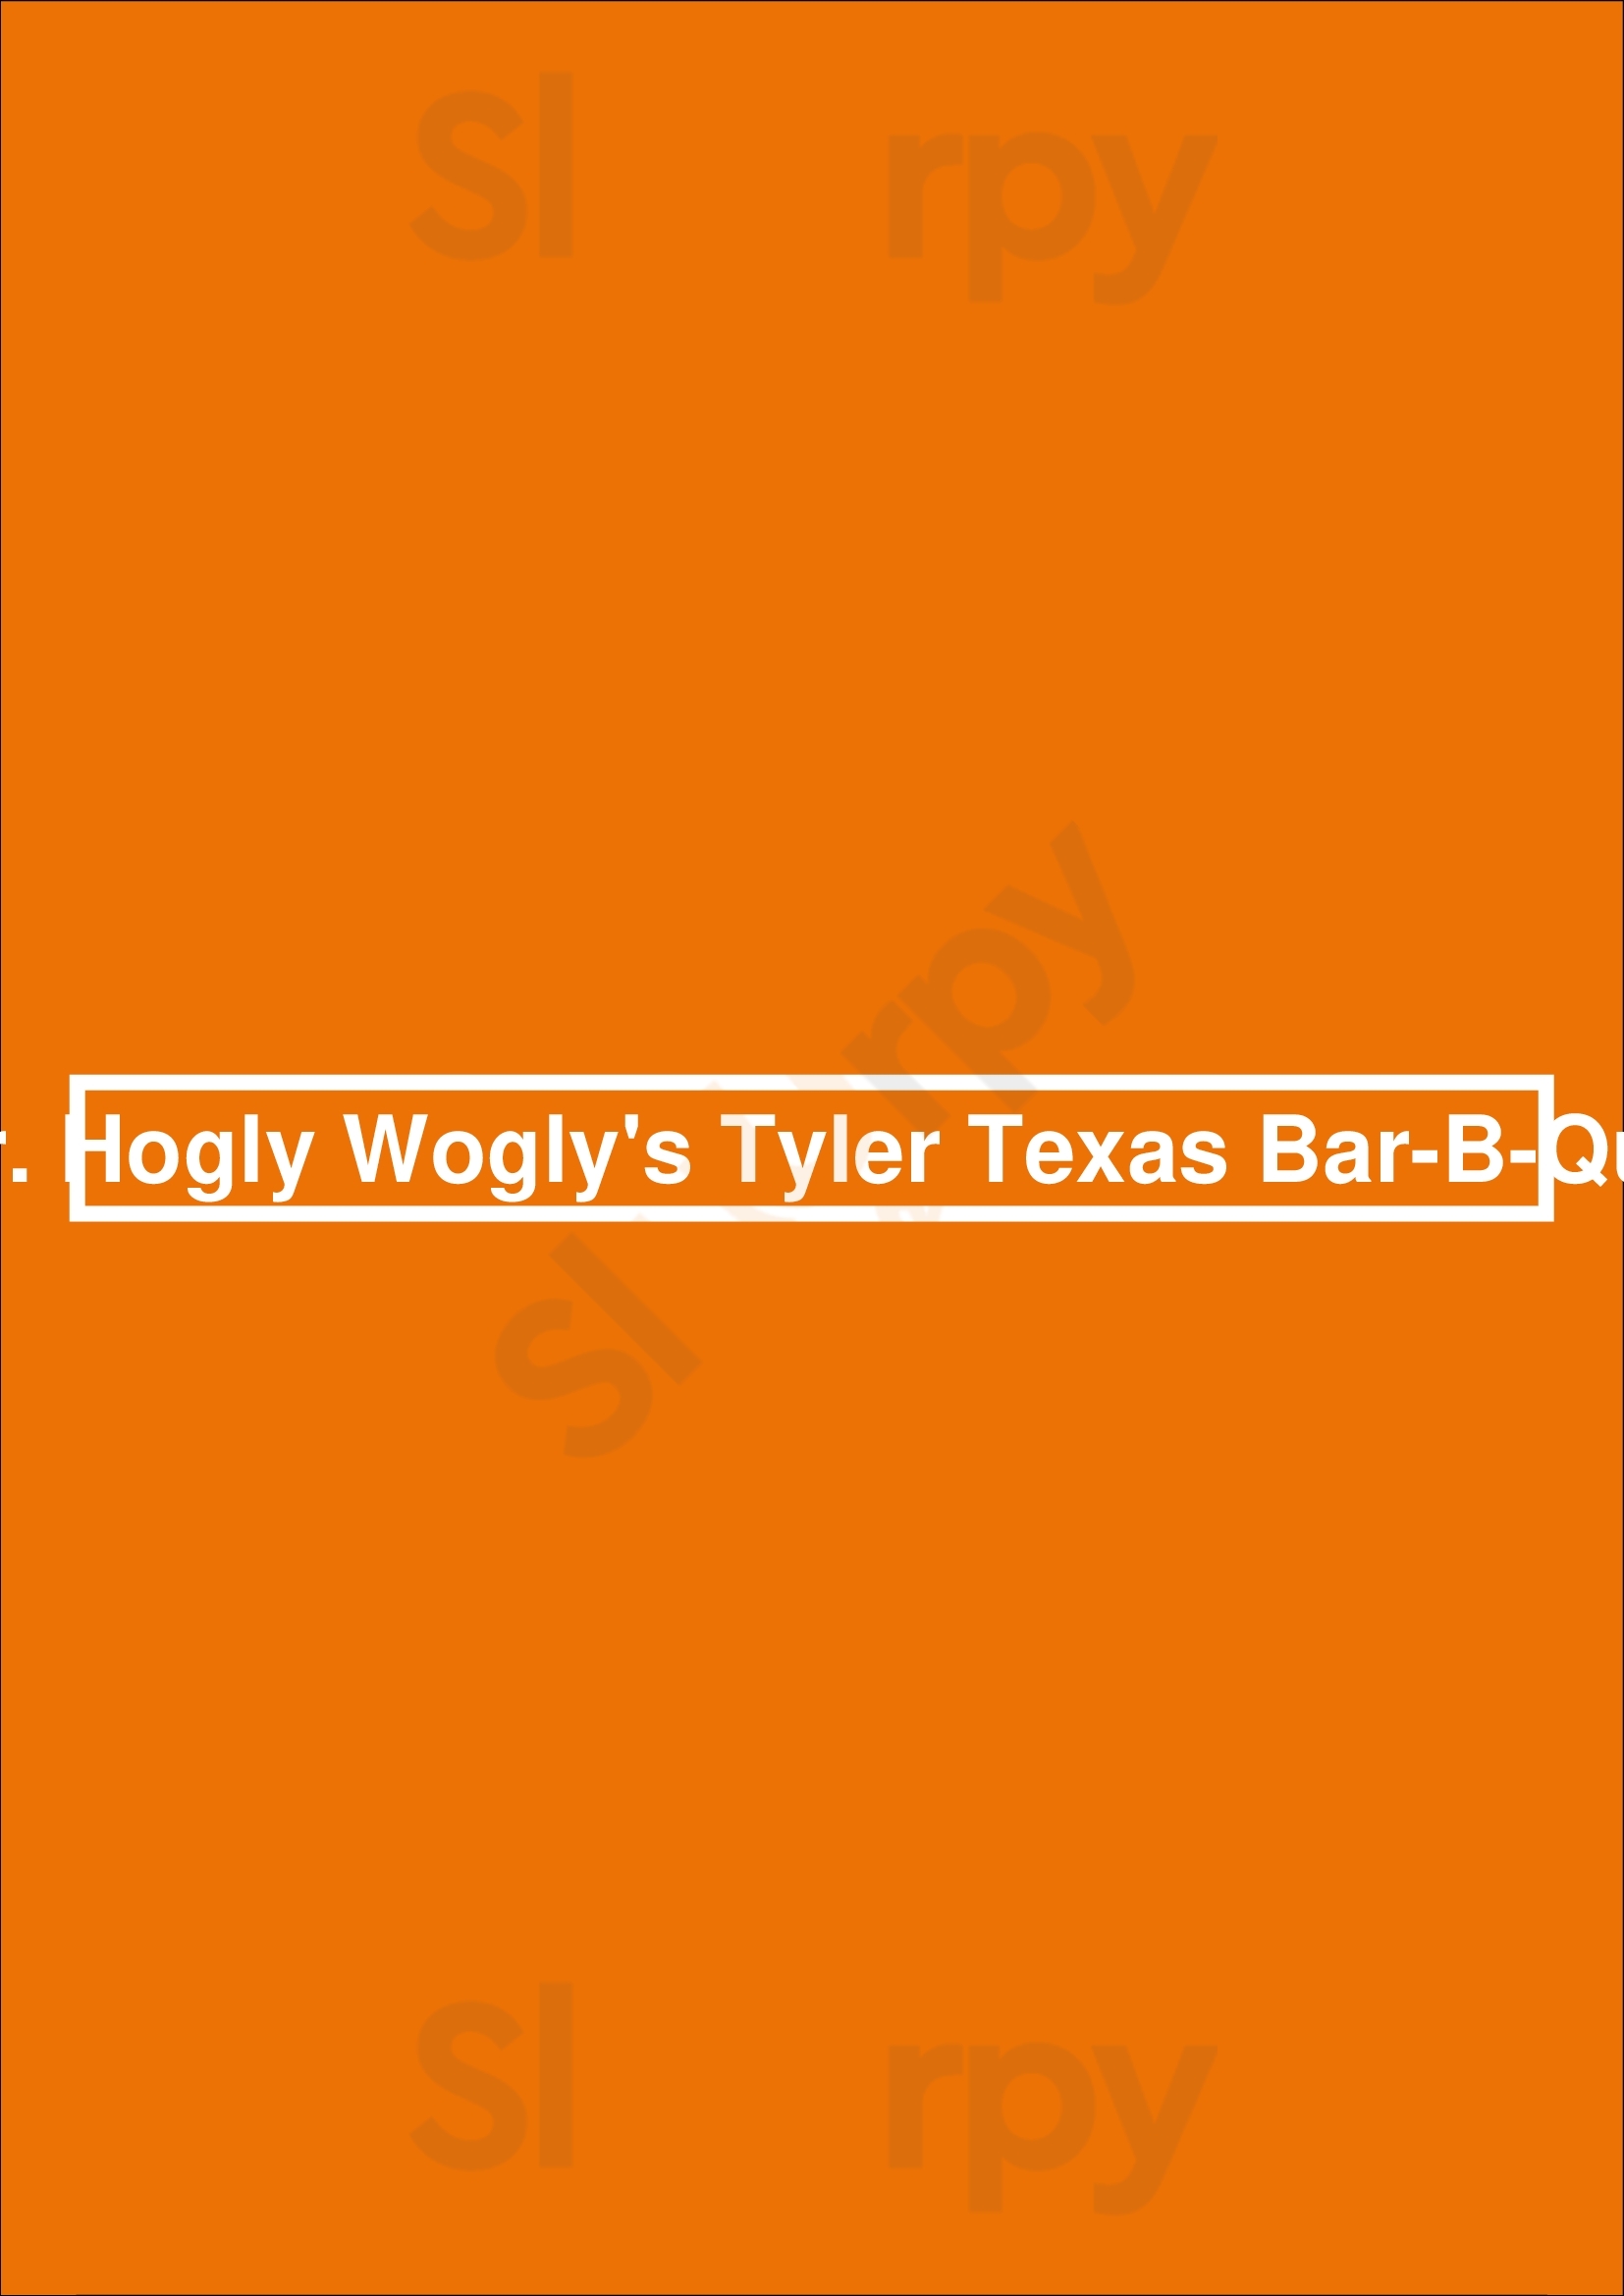 Dr. Hogly Wogly's Tyler Texas Bar-b-que Los Angeles Menu - 1